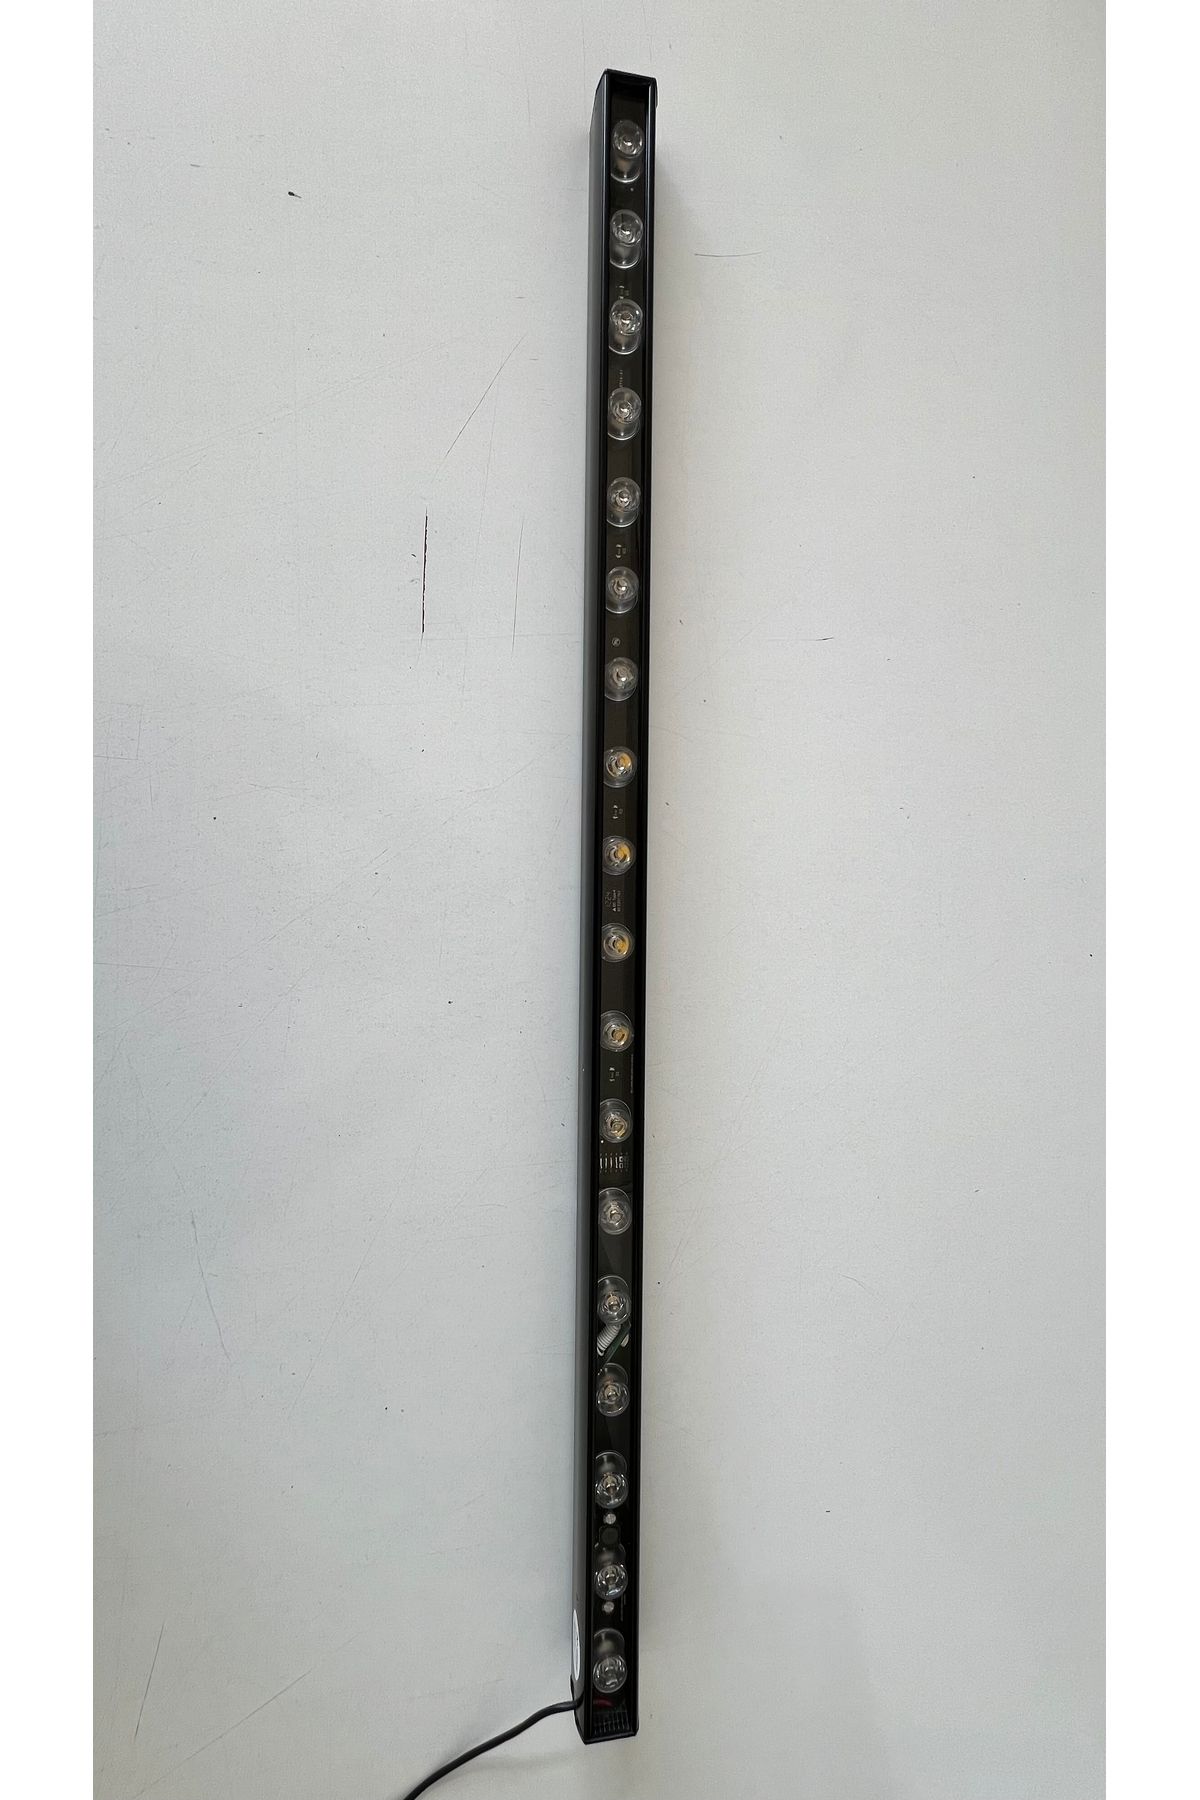 SC 90 cm 12/24 volt tepe lambası uzaktan kumandalı 24 ledli alüminyum siyah kasa